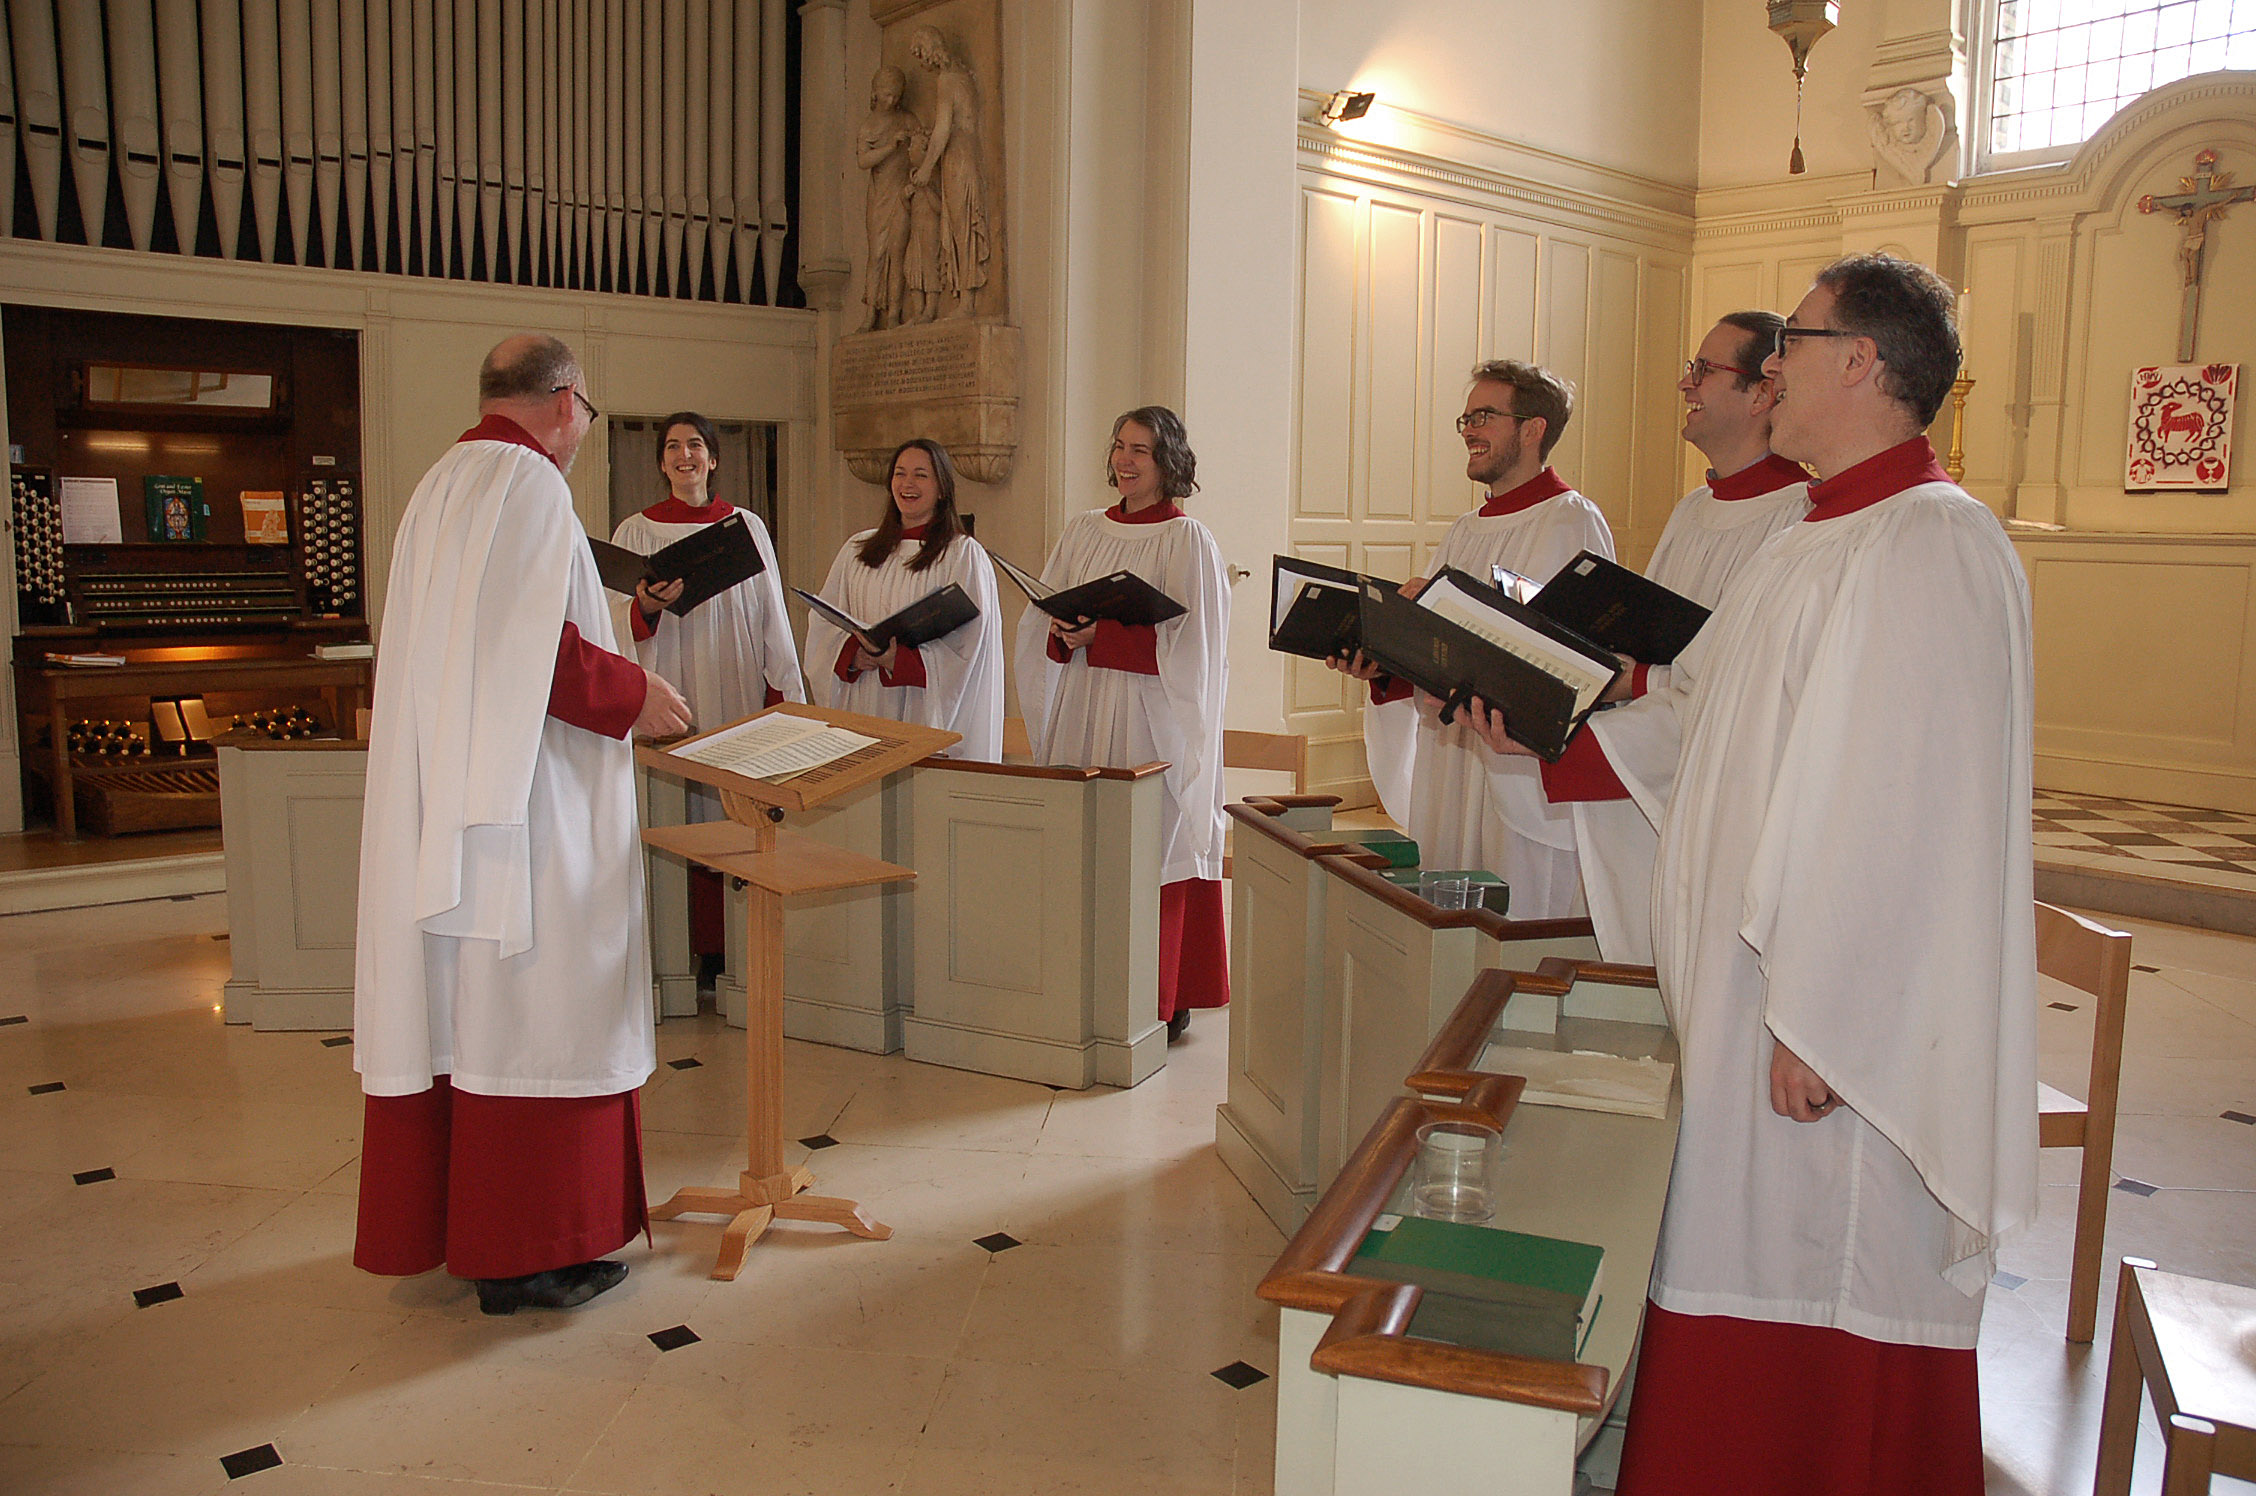 Ye Choirs of New Jerusalem